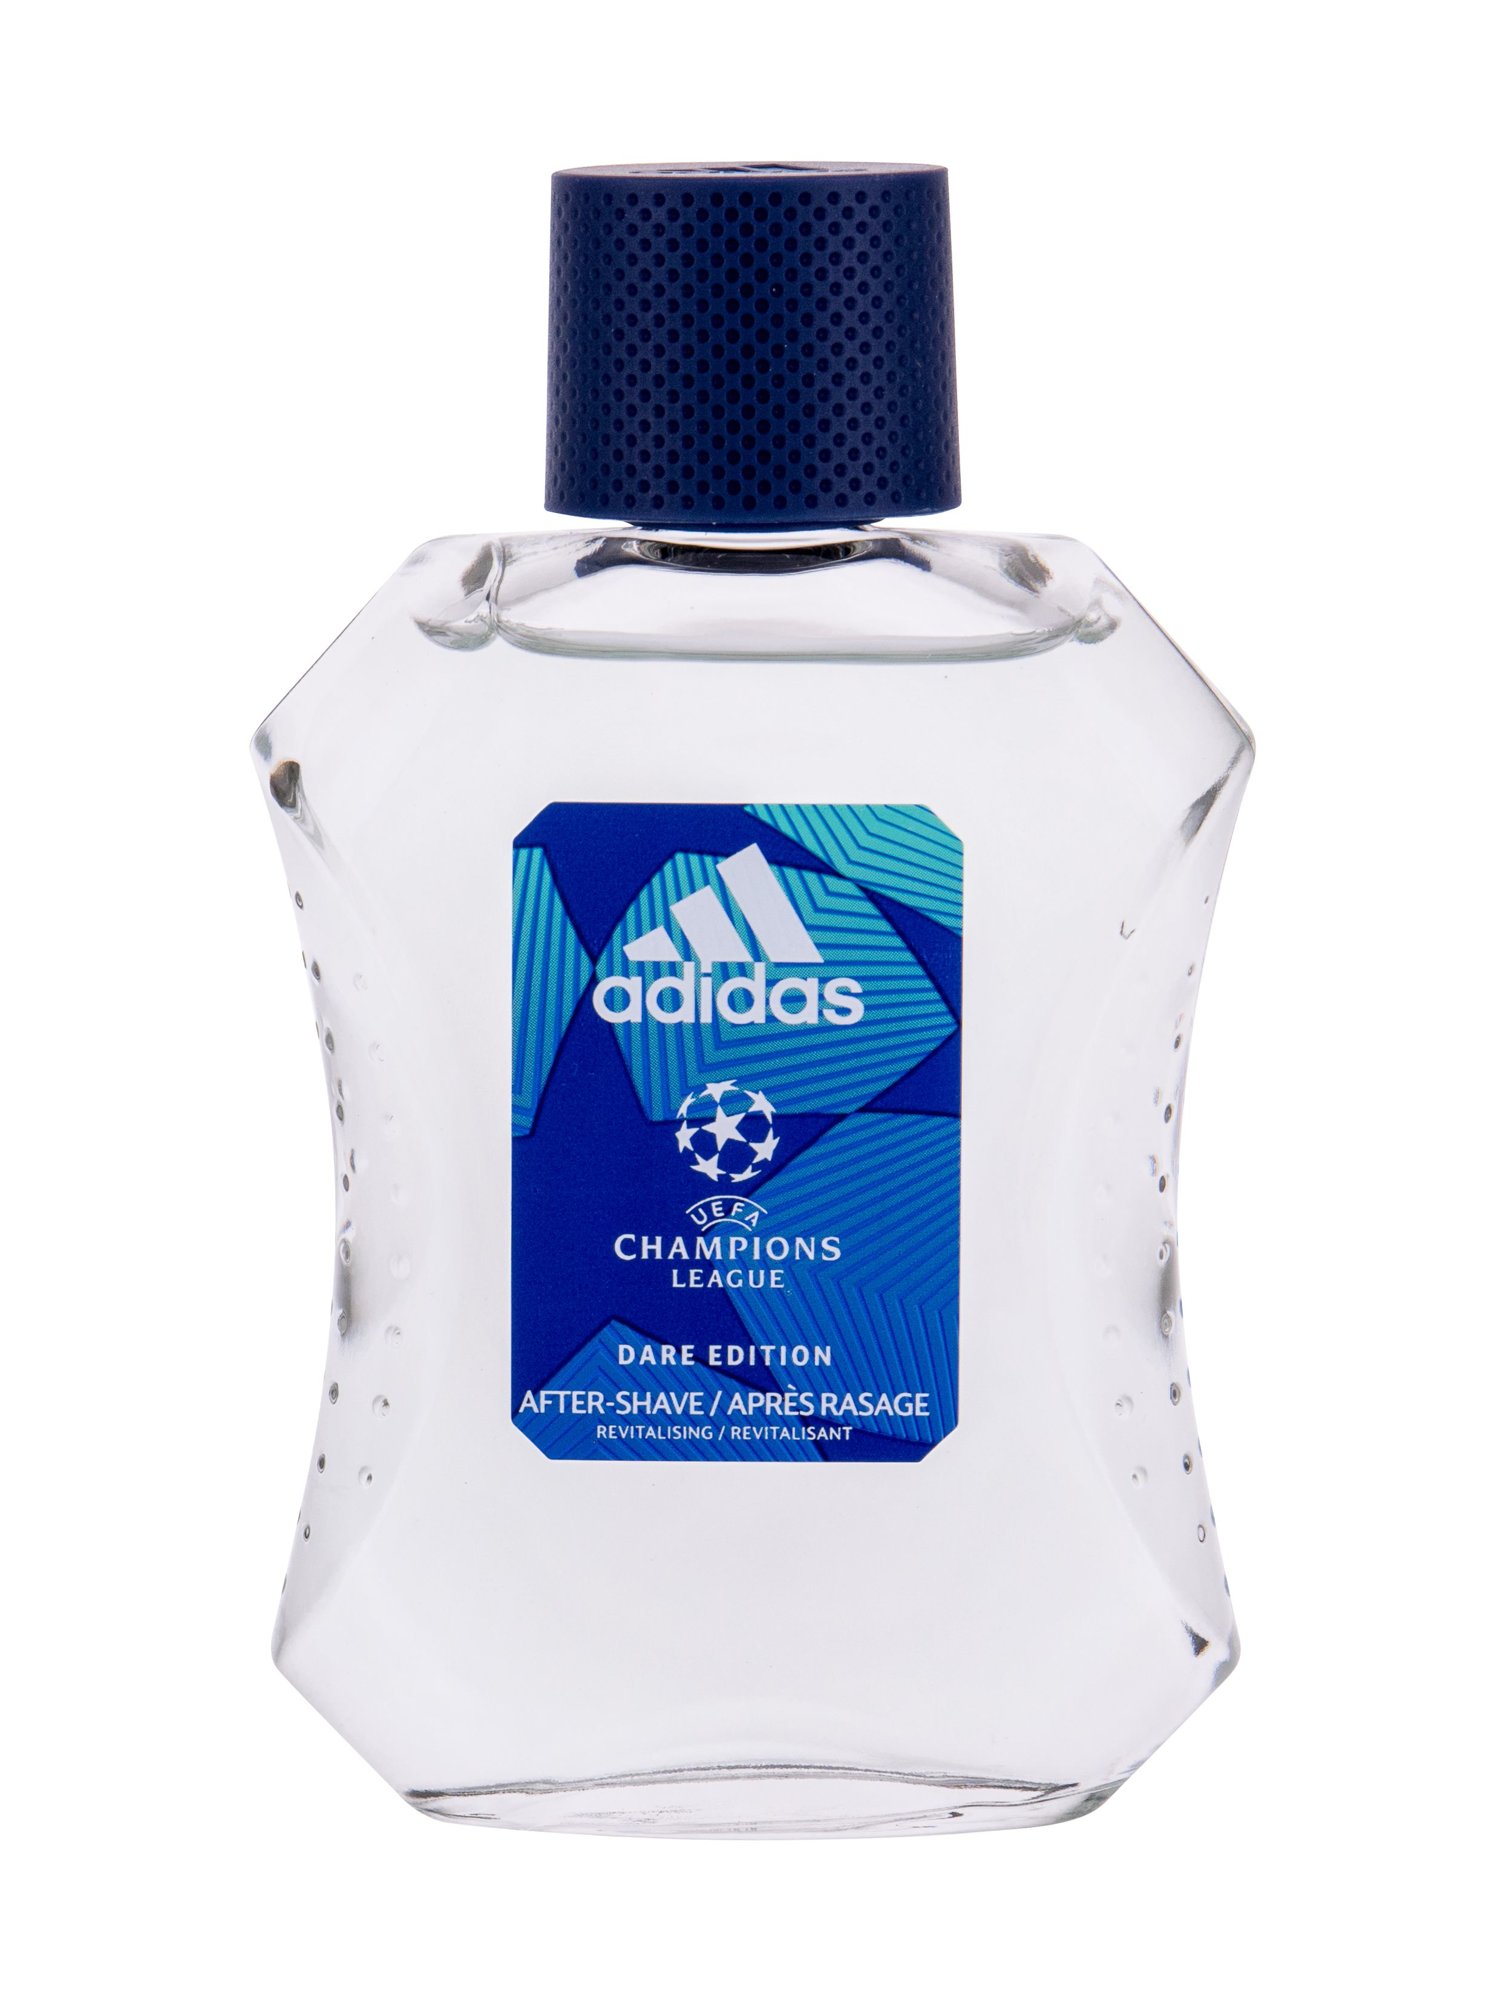 Adidas UEFA Champions League Dare Edition 100ml vanduo po skutimosi